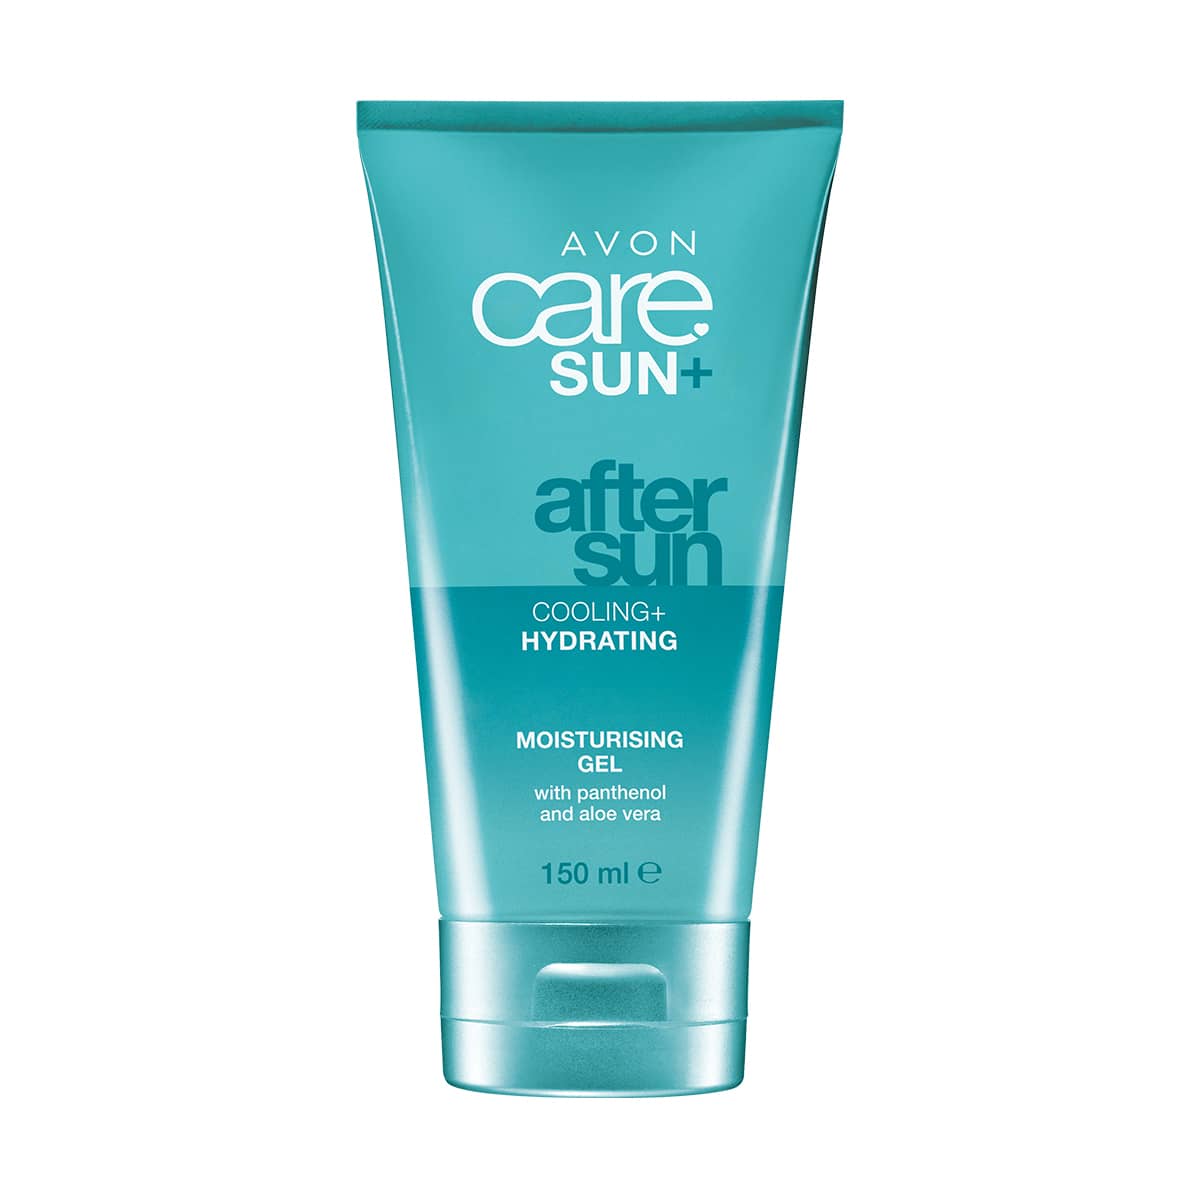 Avon Care Sun+ After Sun Moisturising Gel 150ml